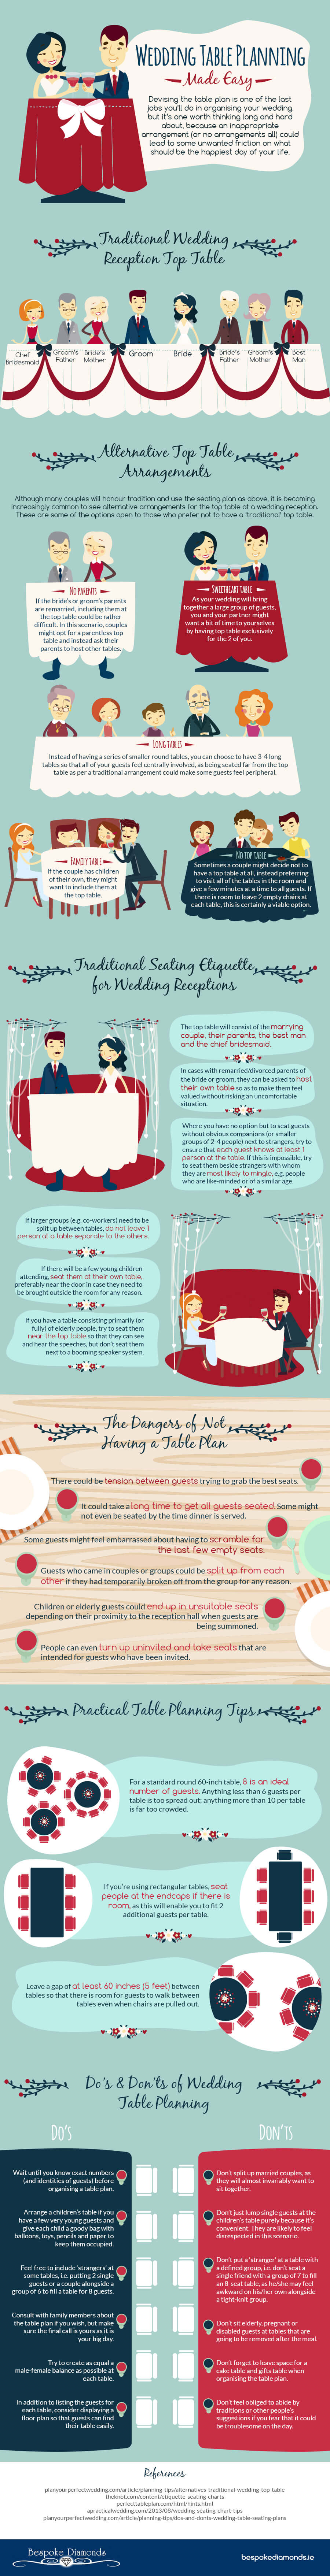 Wedding-Table-Planning-Made-Easy-BespokeDiamonds-infographic-plaza